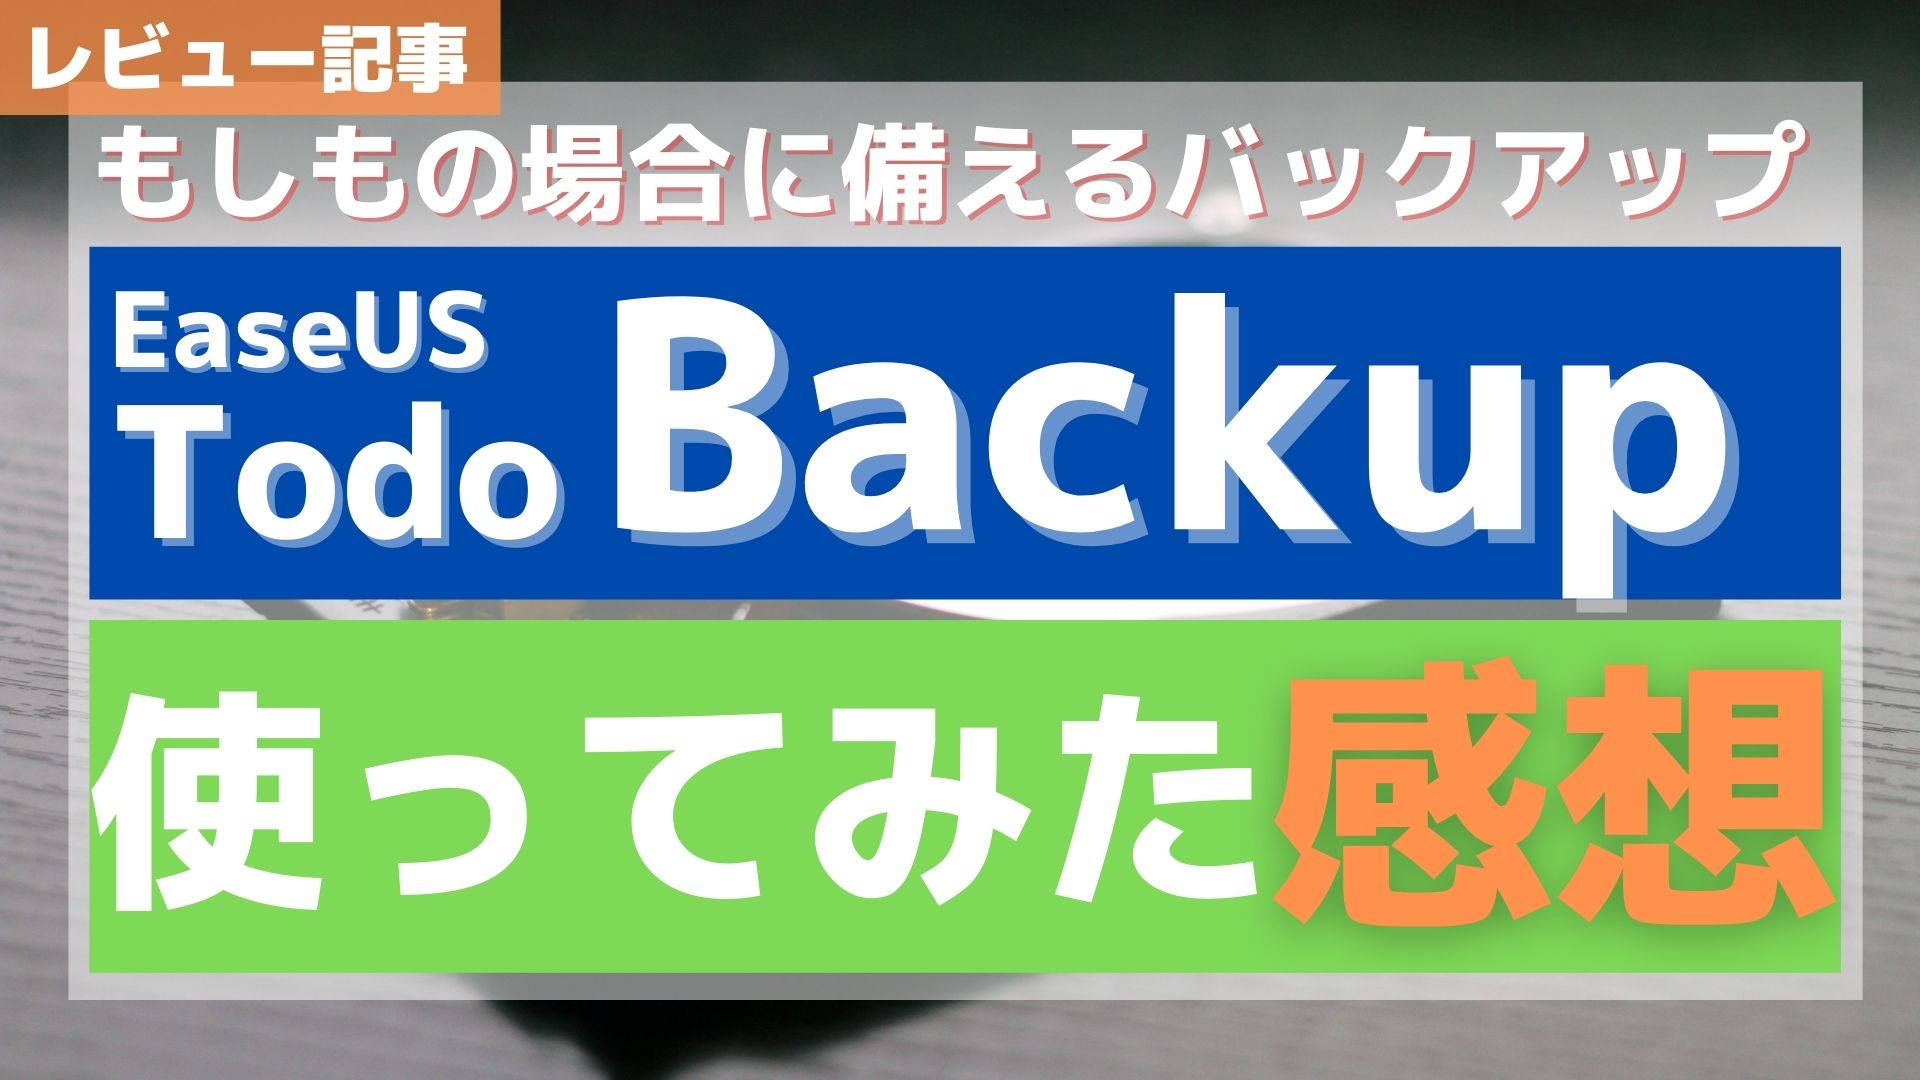 EASEUS Todo Backup 16.0 for ios instal